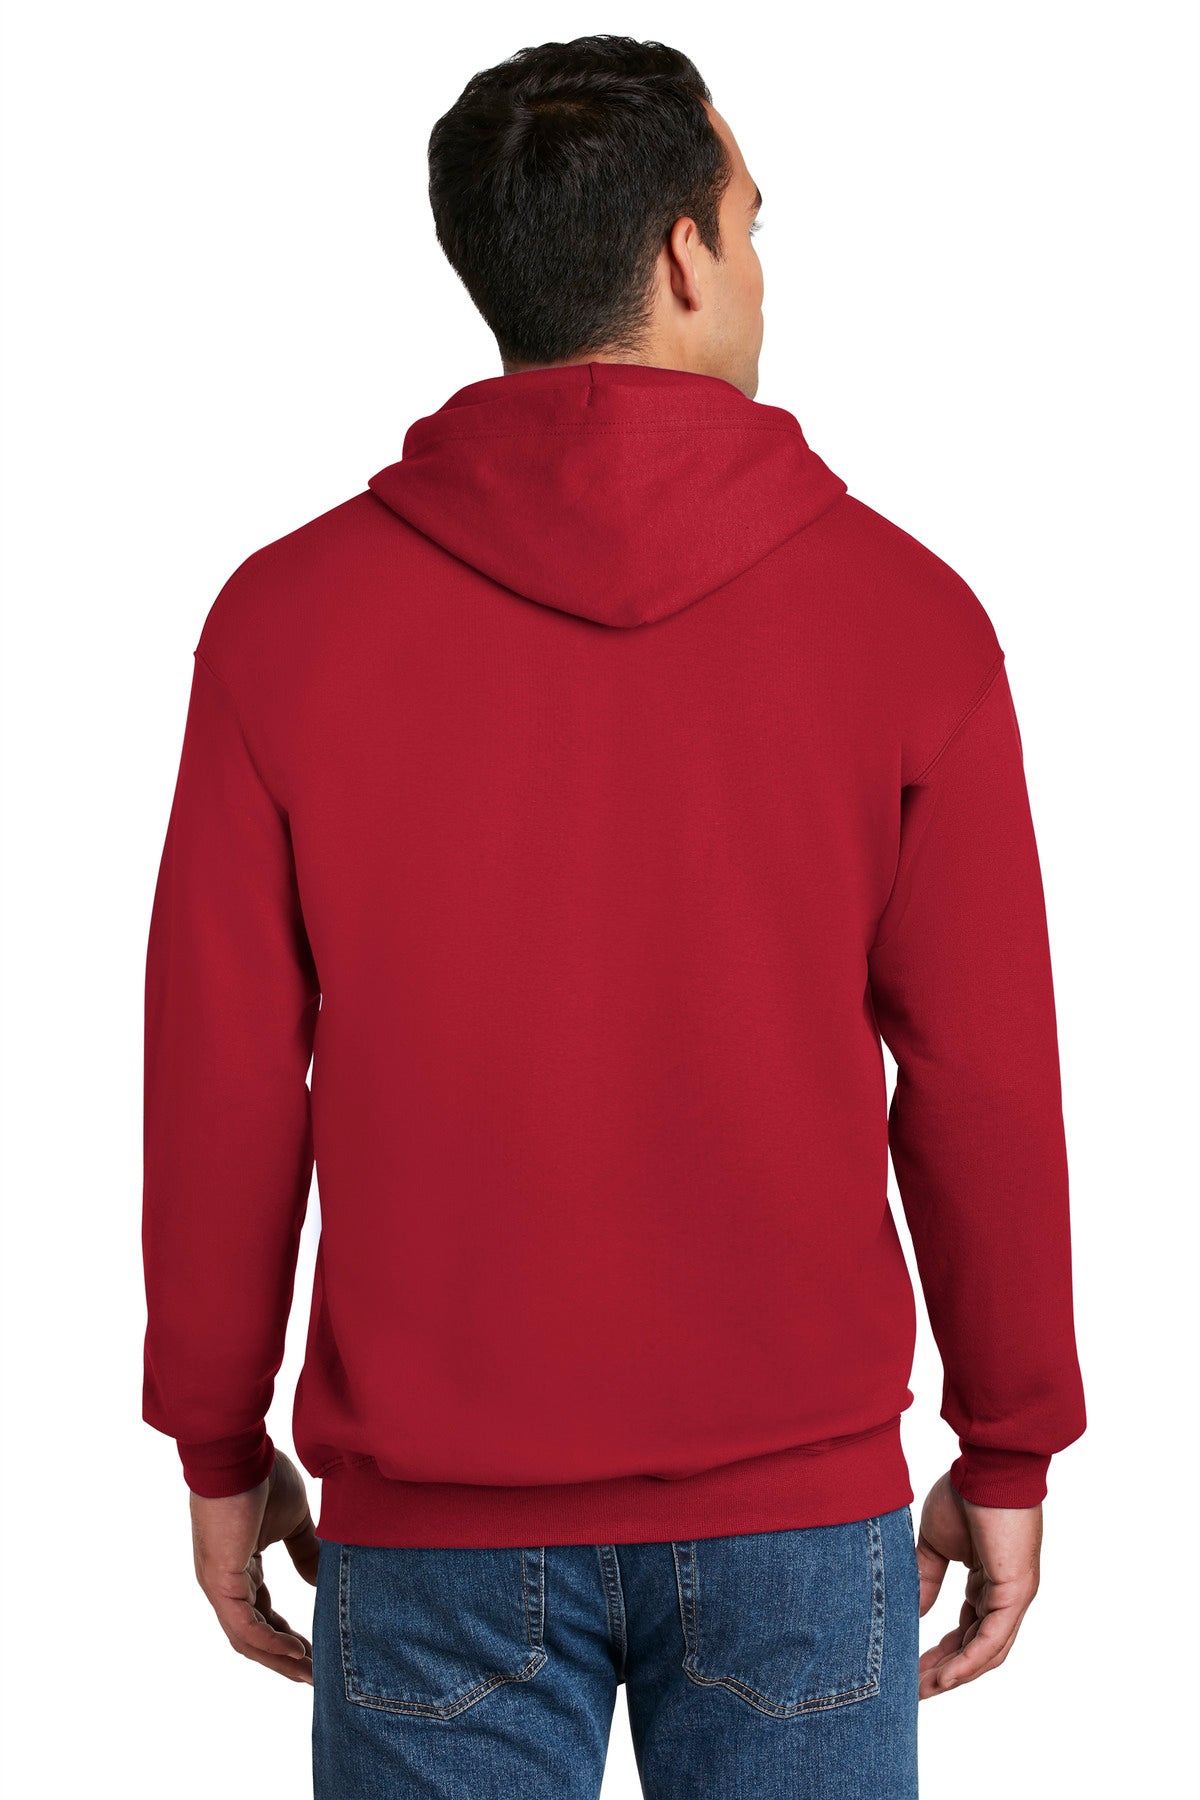 Hanes Ultimate Cotton - Full-Zip Hooded Sweatshirt. F283